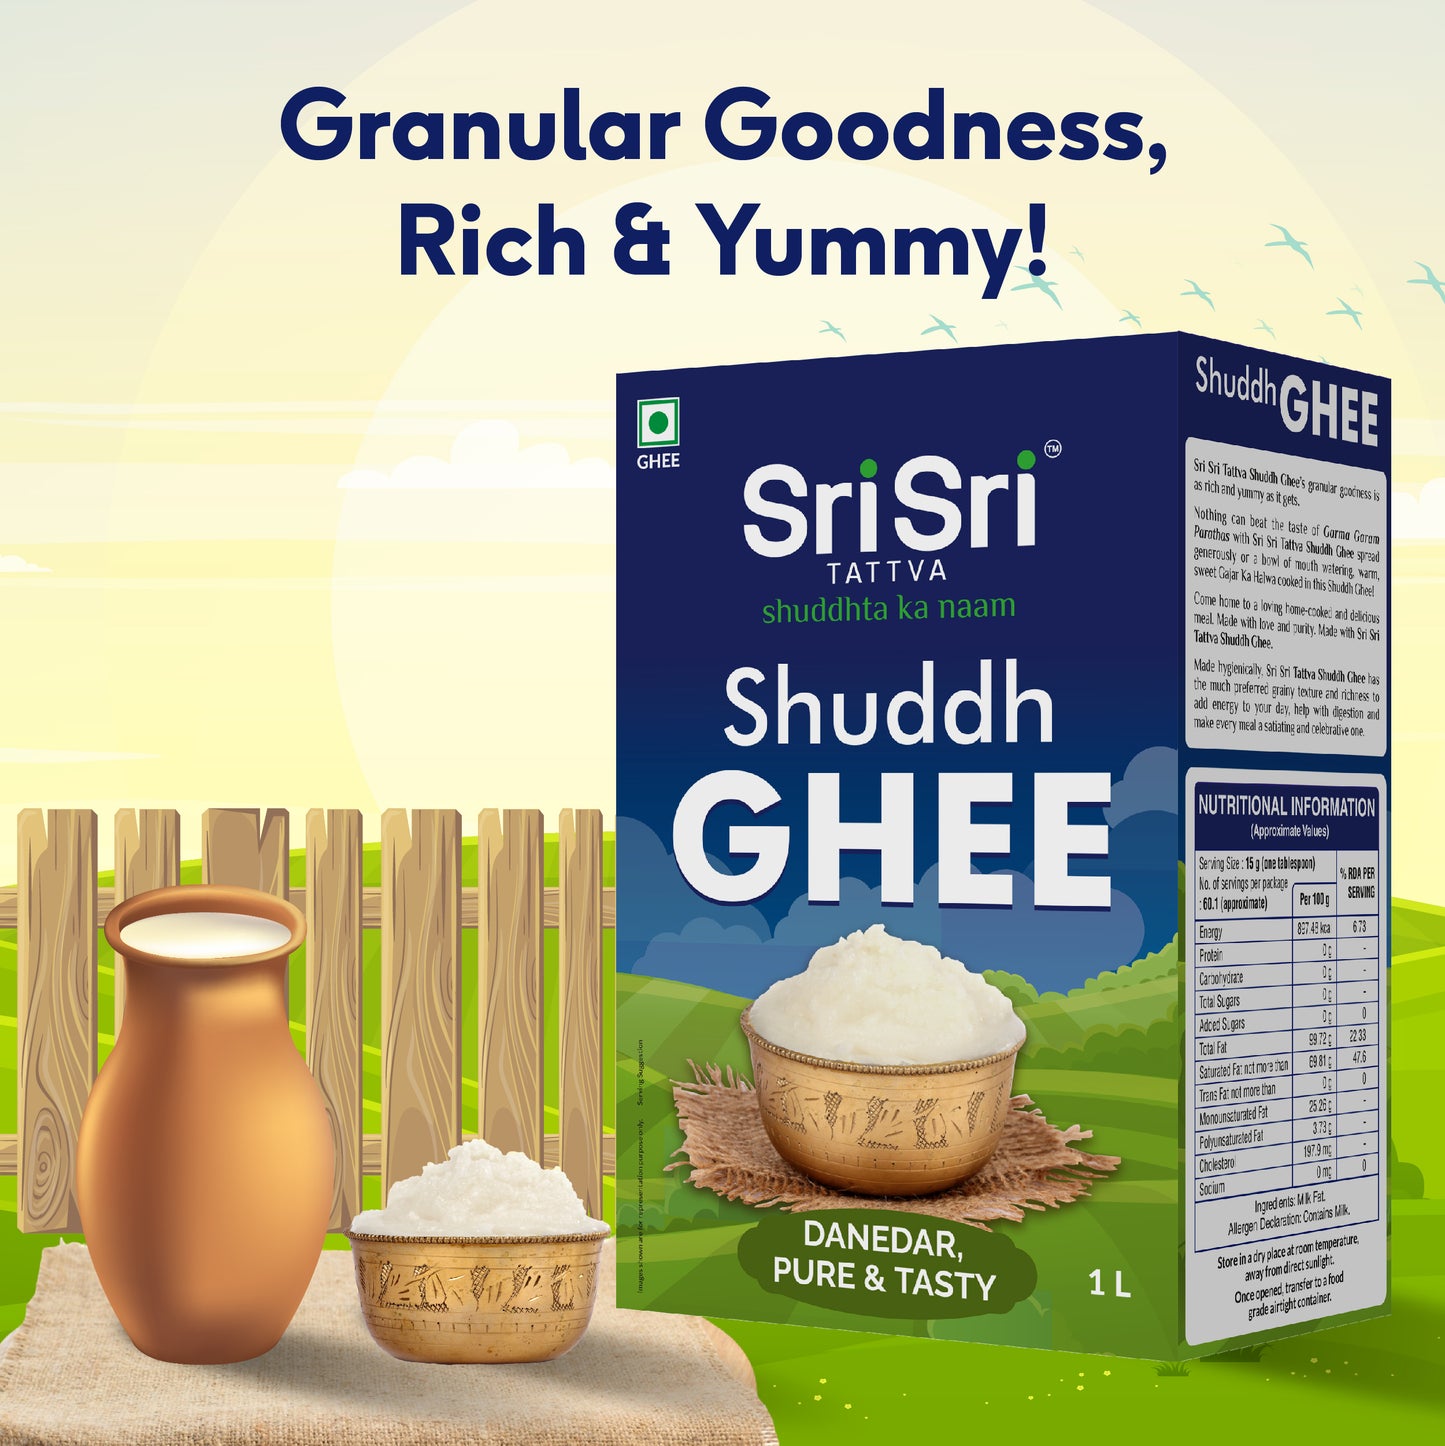 Shuddh Ghee - Danedar, Pure & Tasty, 1 L